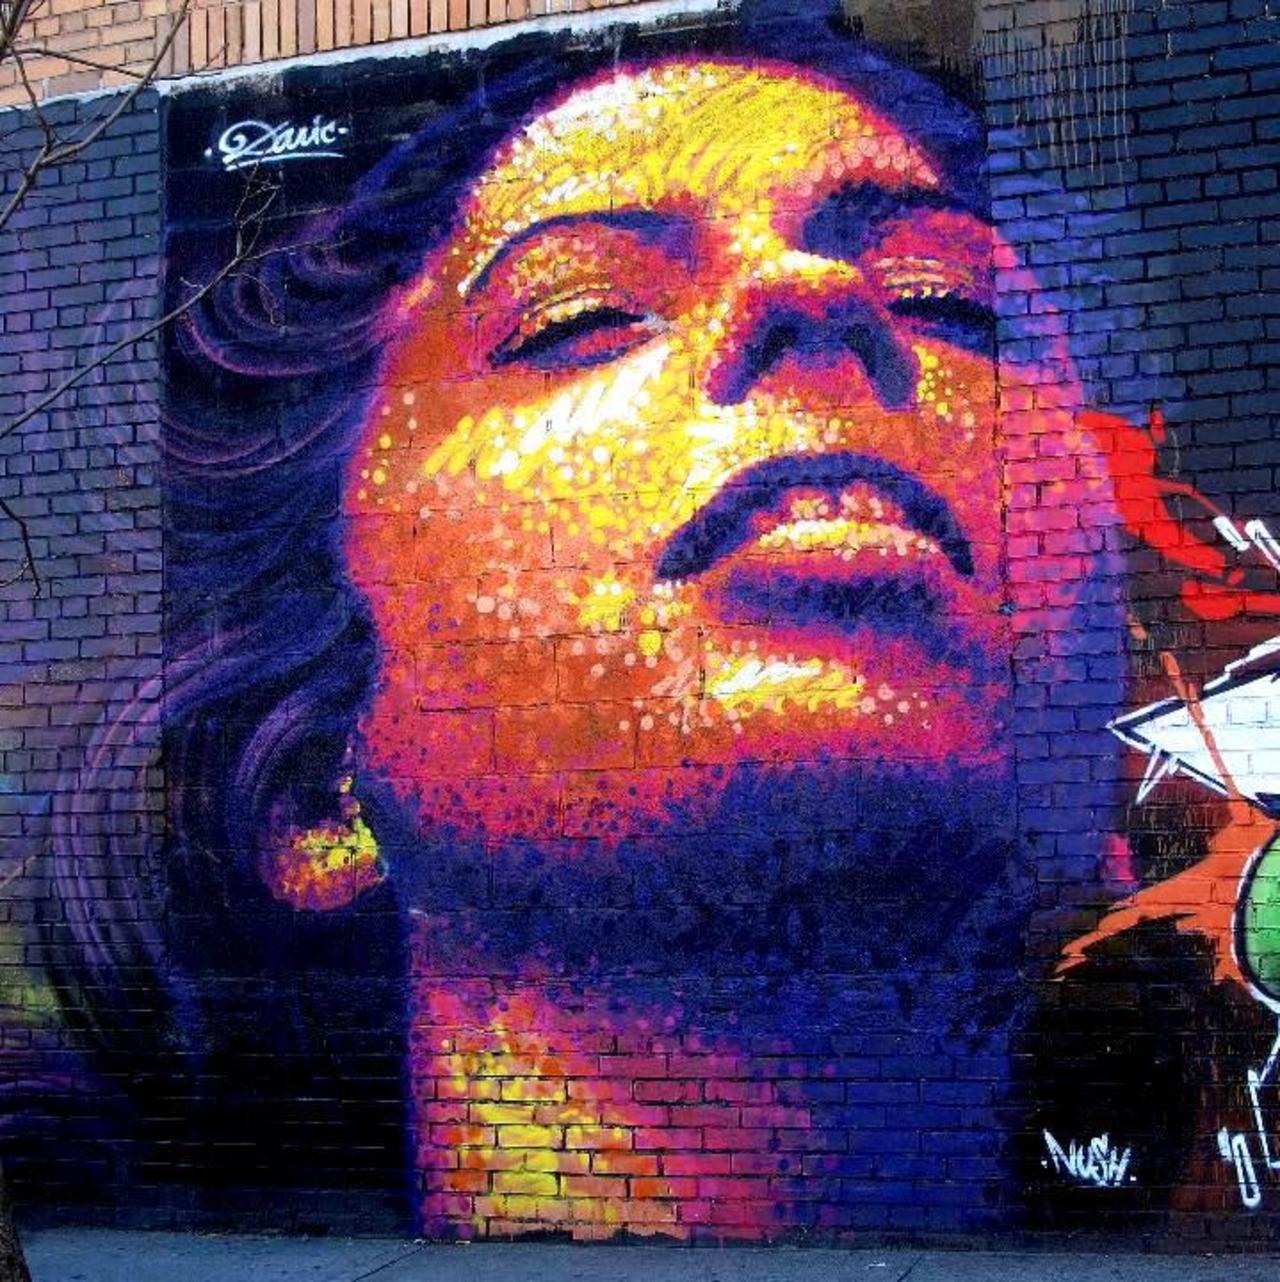 Dasic 
South Bronx
#streetart #art #graffiti #mural http://t.co/3L7nvOaw3v